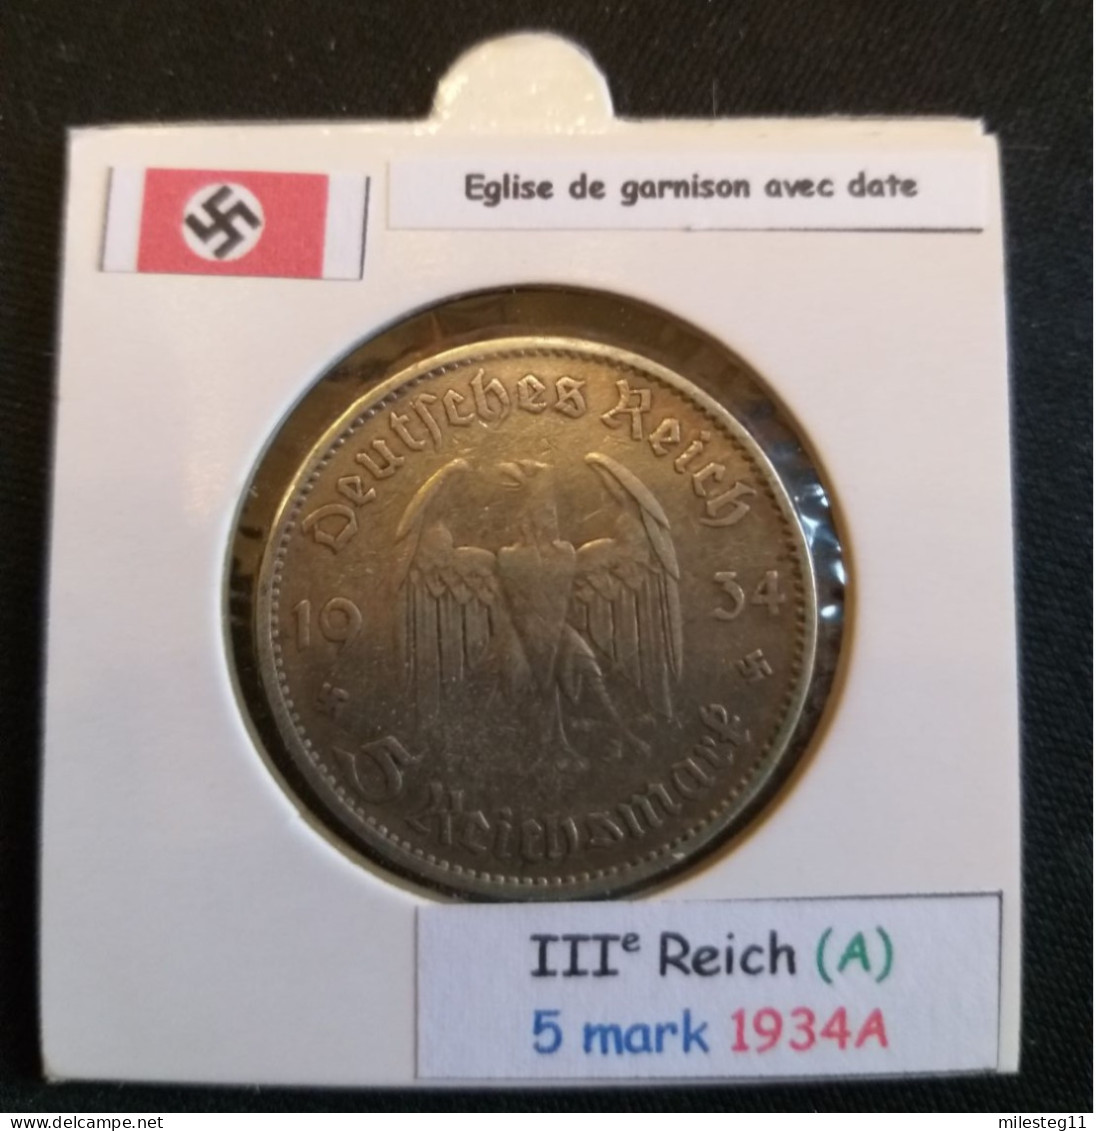 Pièce De 5 Reichsmark De 1934A (Berlin) Eglise De Garnison Avec Date (position A) - 5 Reichsmark